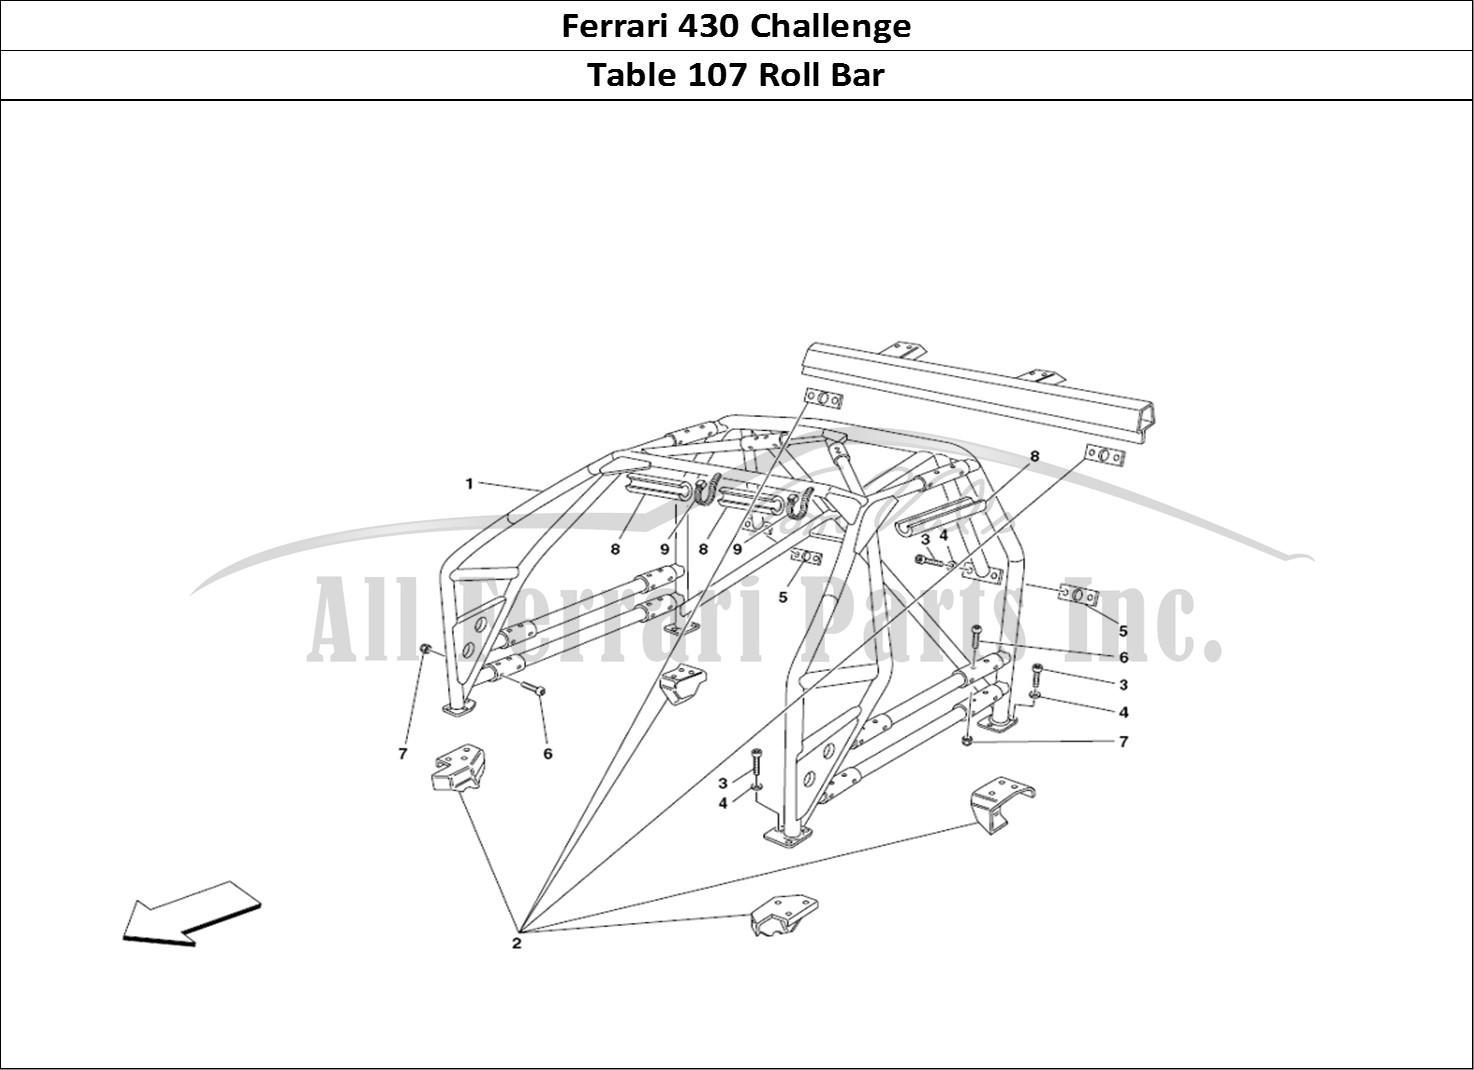 Ferrari Parts Ferrari 430 Challenge (2006) Page 107 Roll Bar